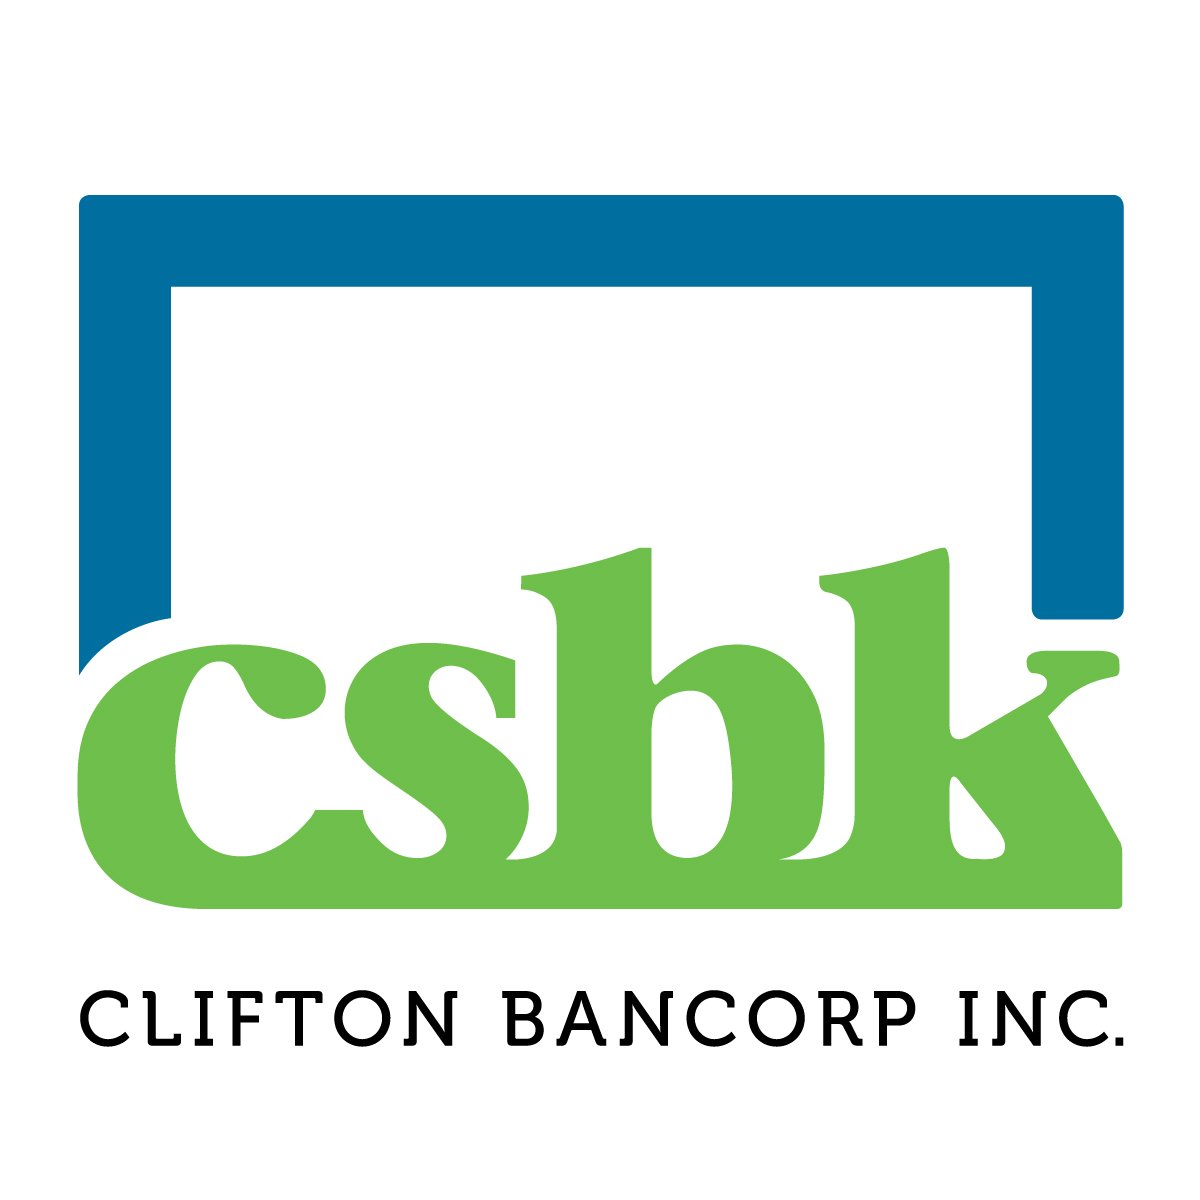 CSBK stock logo